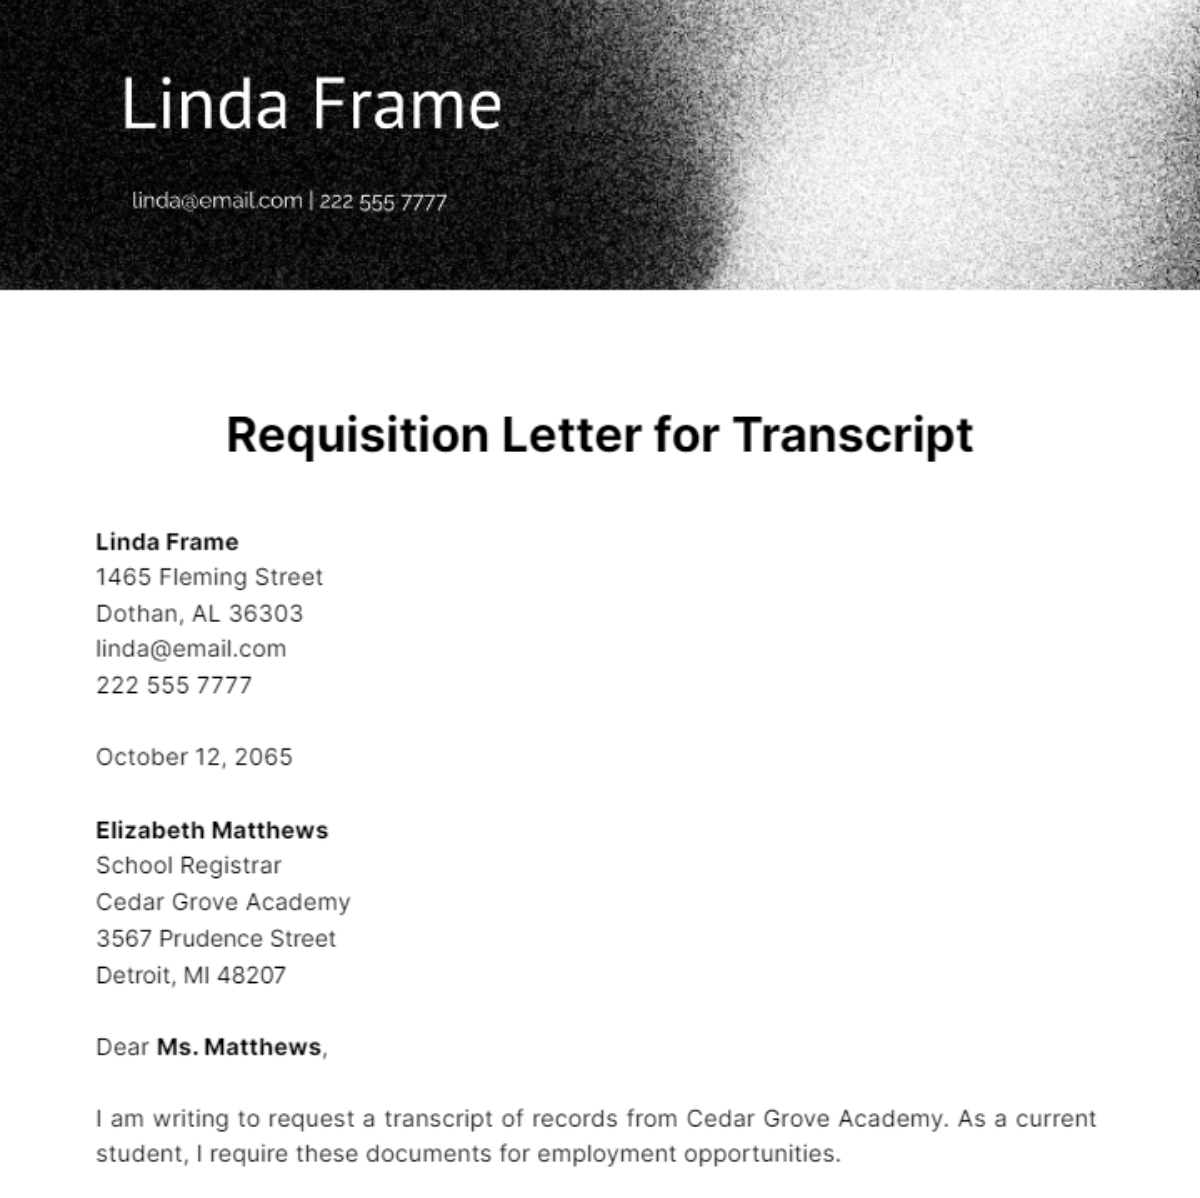 Requisition Letter for Transcript Template